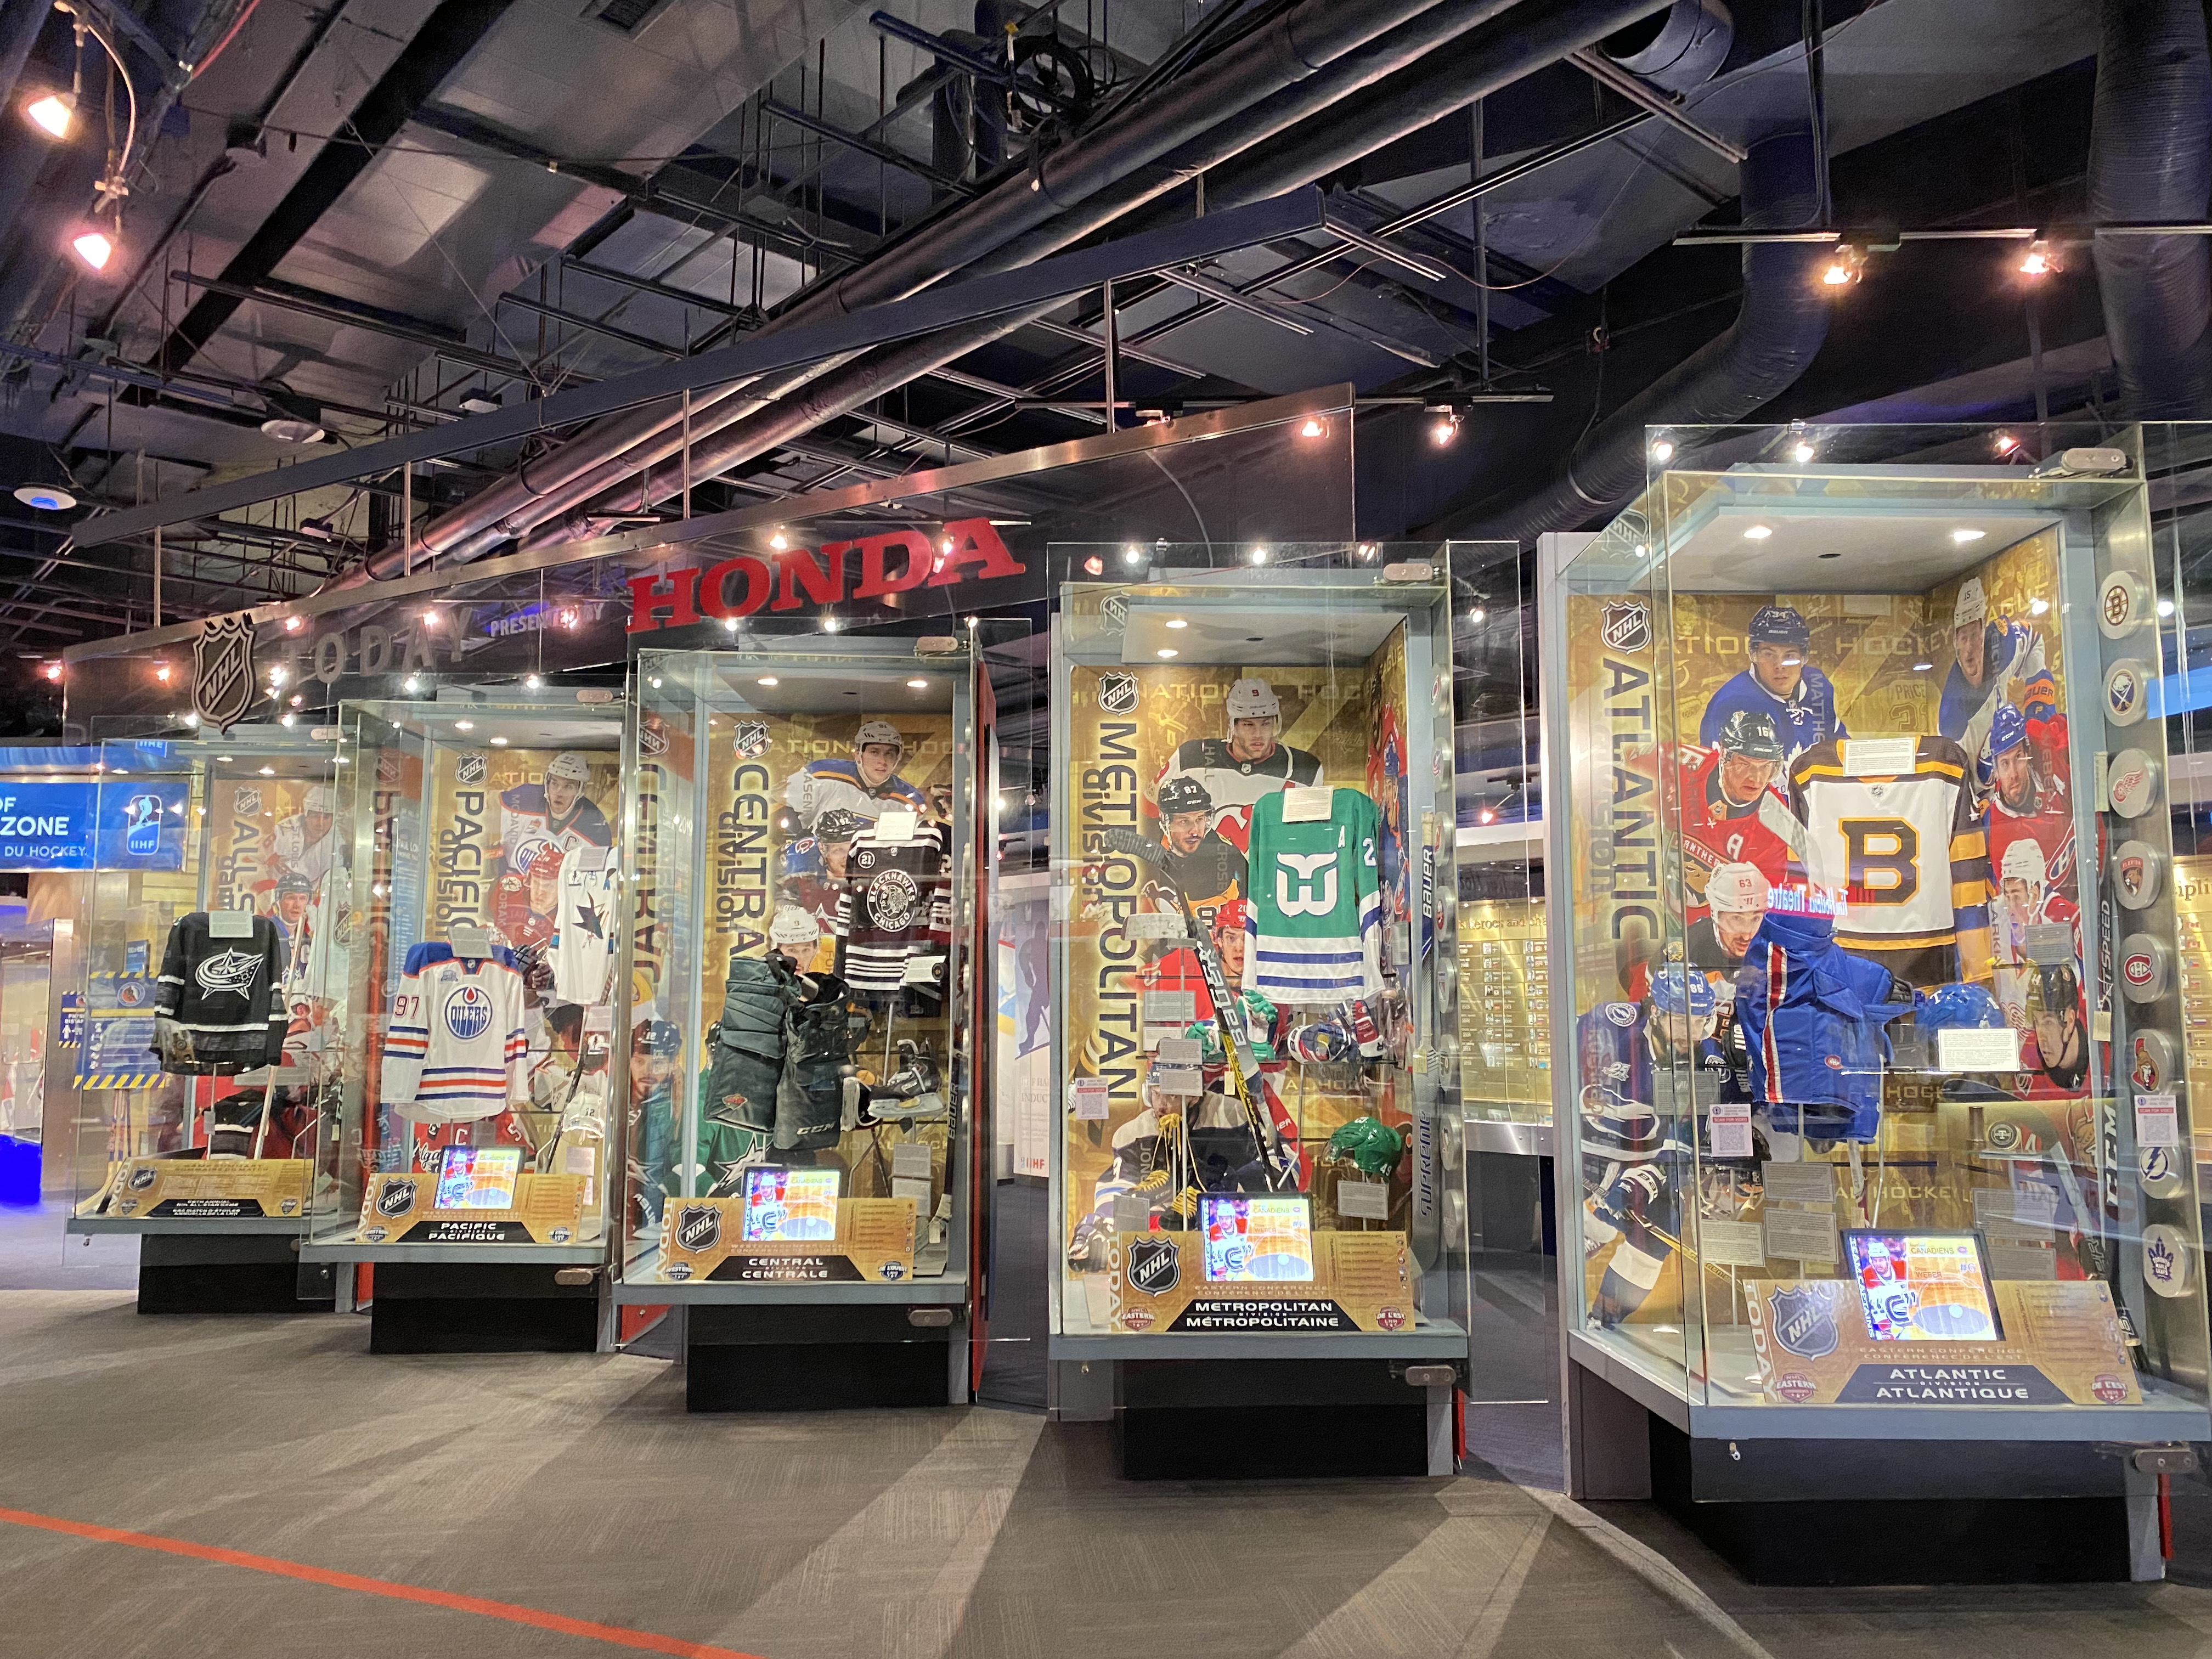 Hockey Hall of Fame - Exhibits